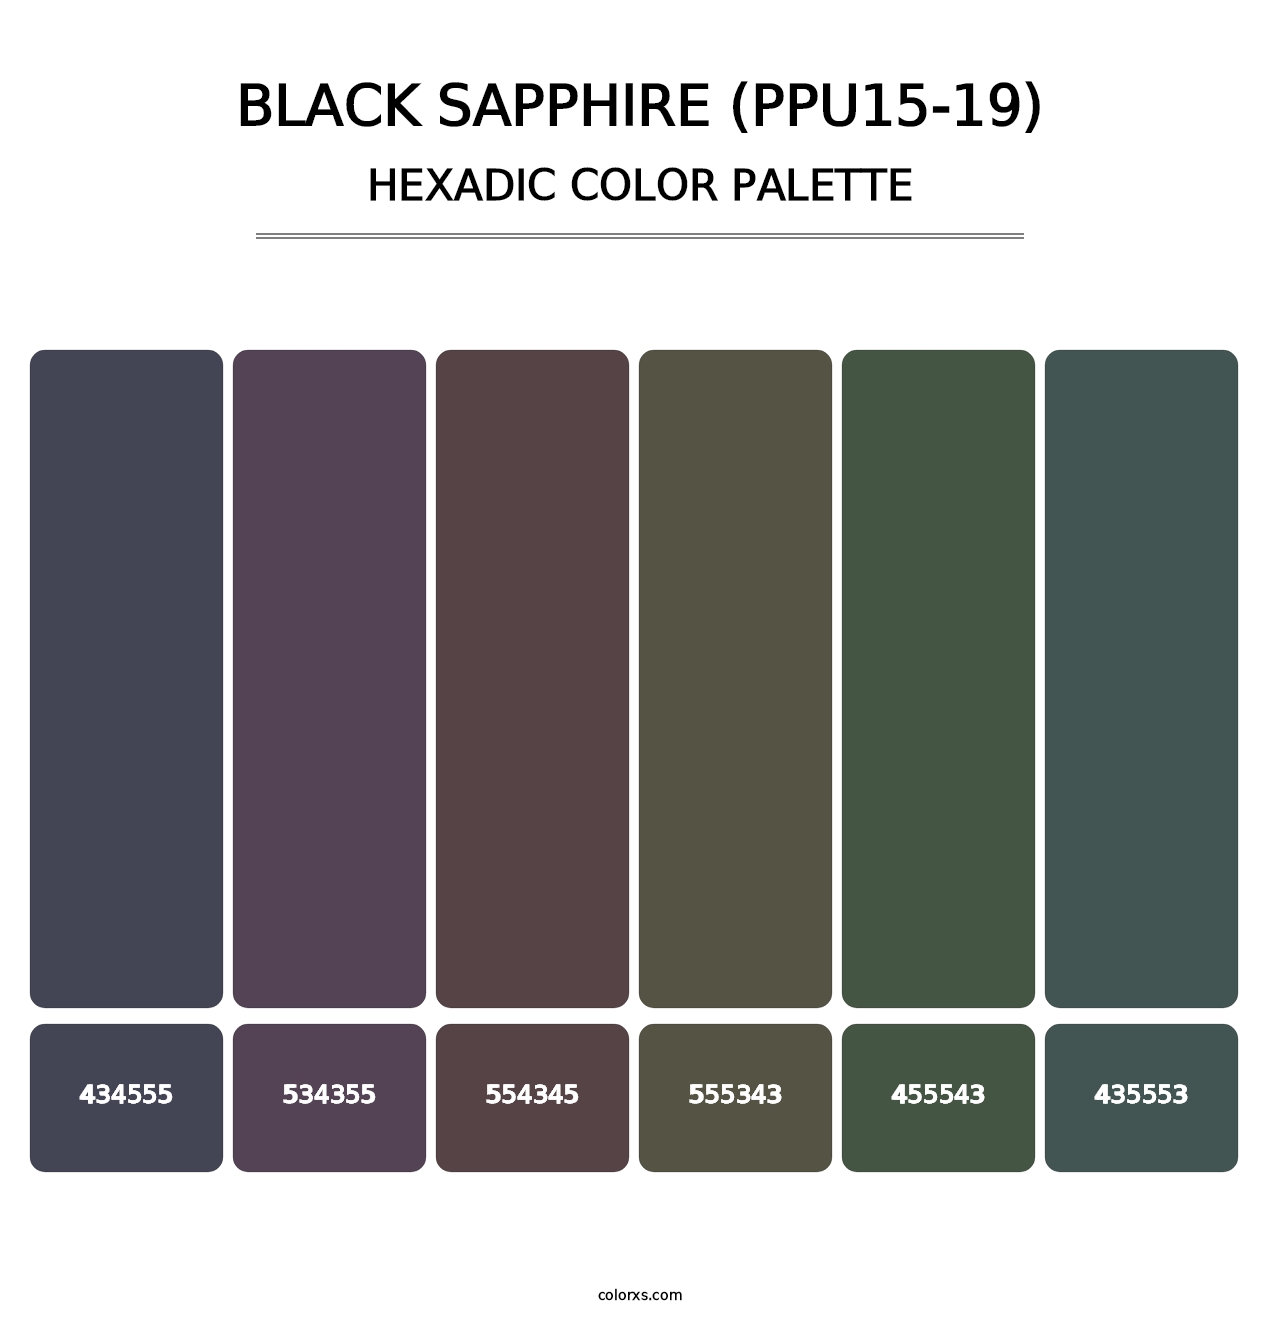 Black Sapphire (PPU15-19) - Hexadic Color Palette